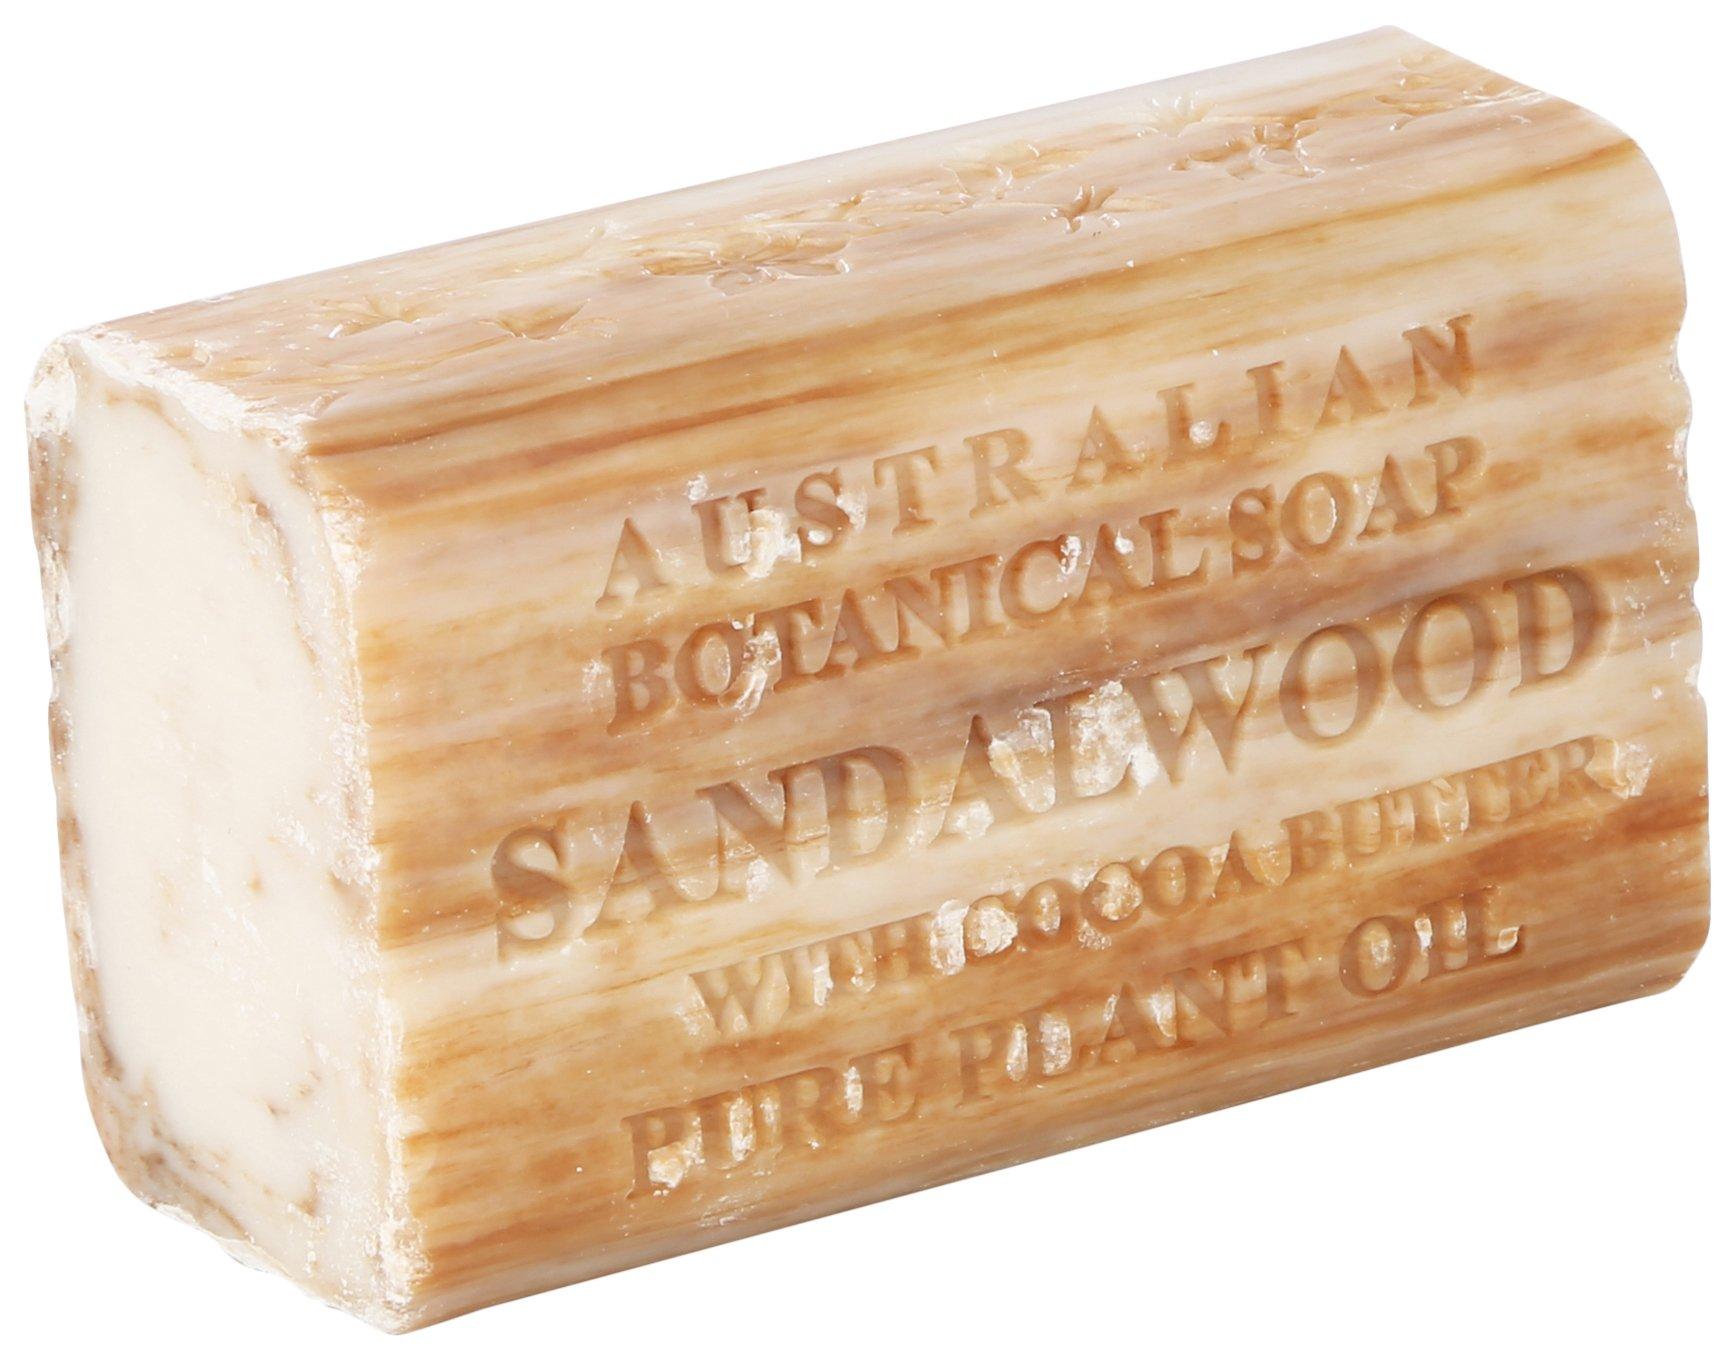 6.6 Oz. Sandalwood Bar Soap